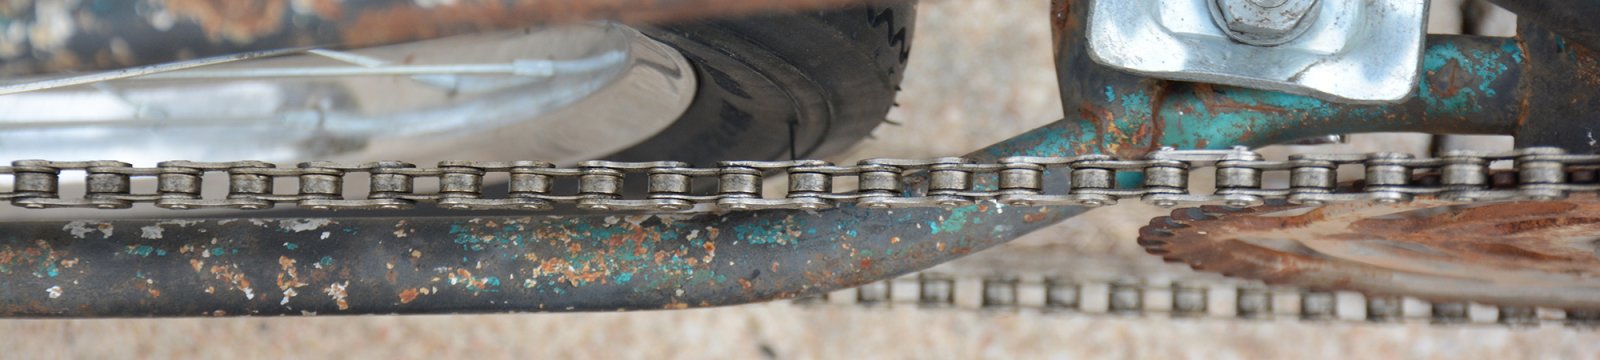 BftD_murray_muscle_bike_tire_issues_8.jpg